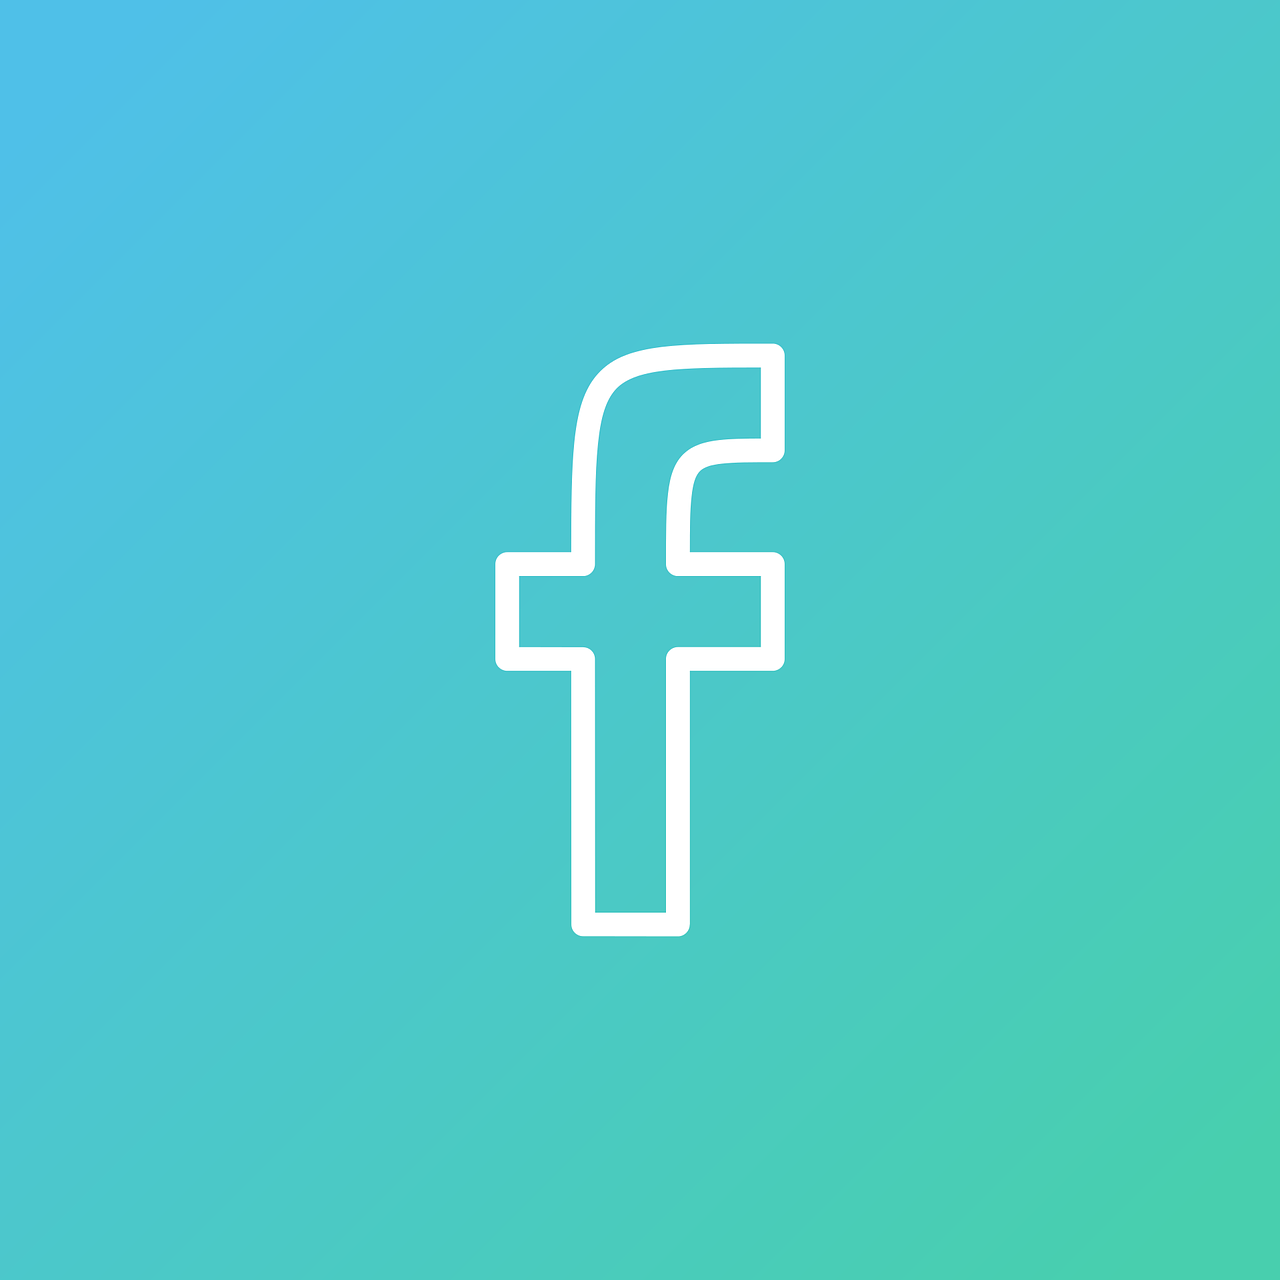 Download Free Photo Of Facebook Face Facebook Icon Facebook Logo Facebook Symbol From Needpix Com